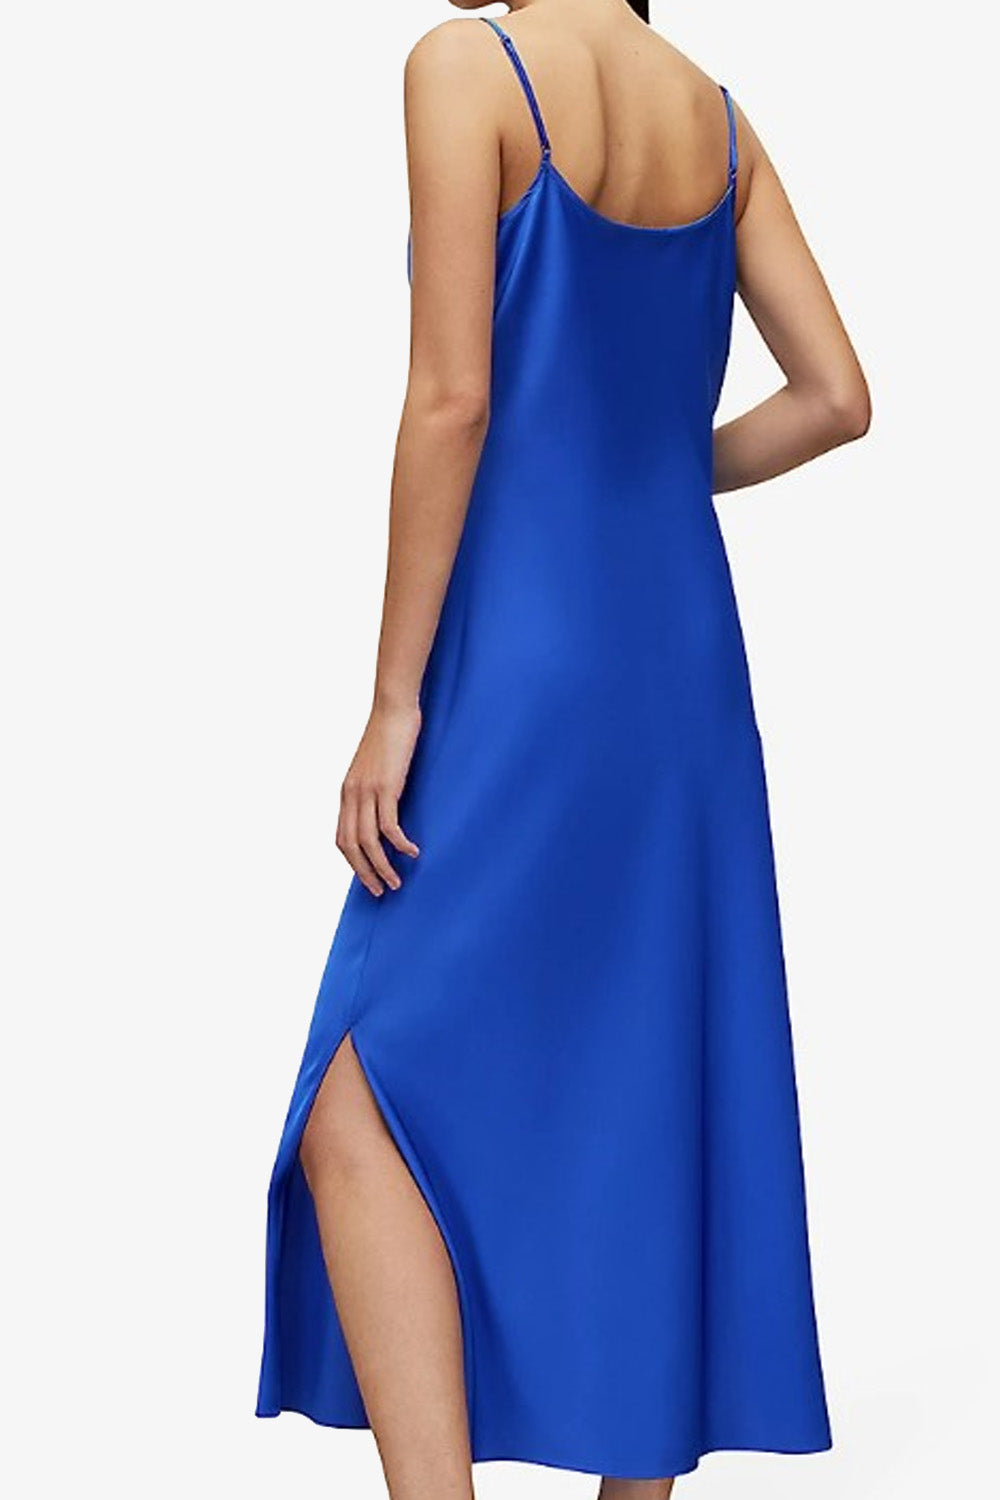 Serenity  Blue Dress